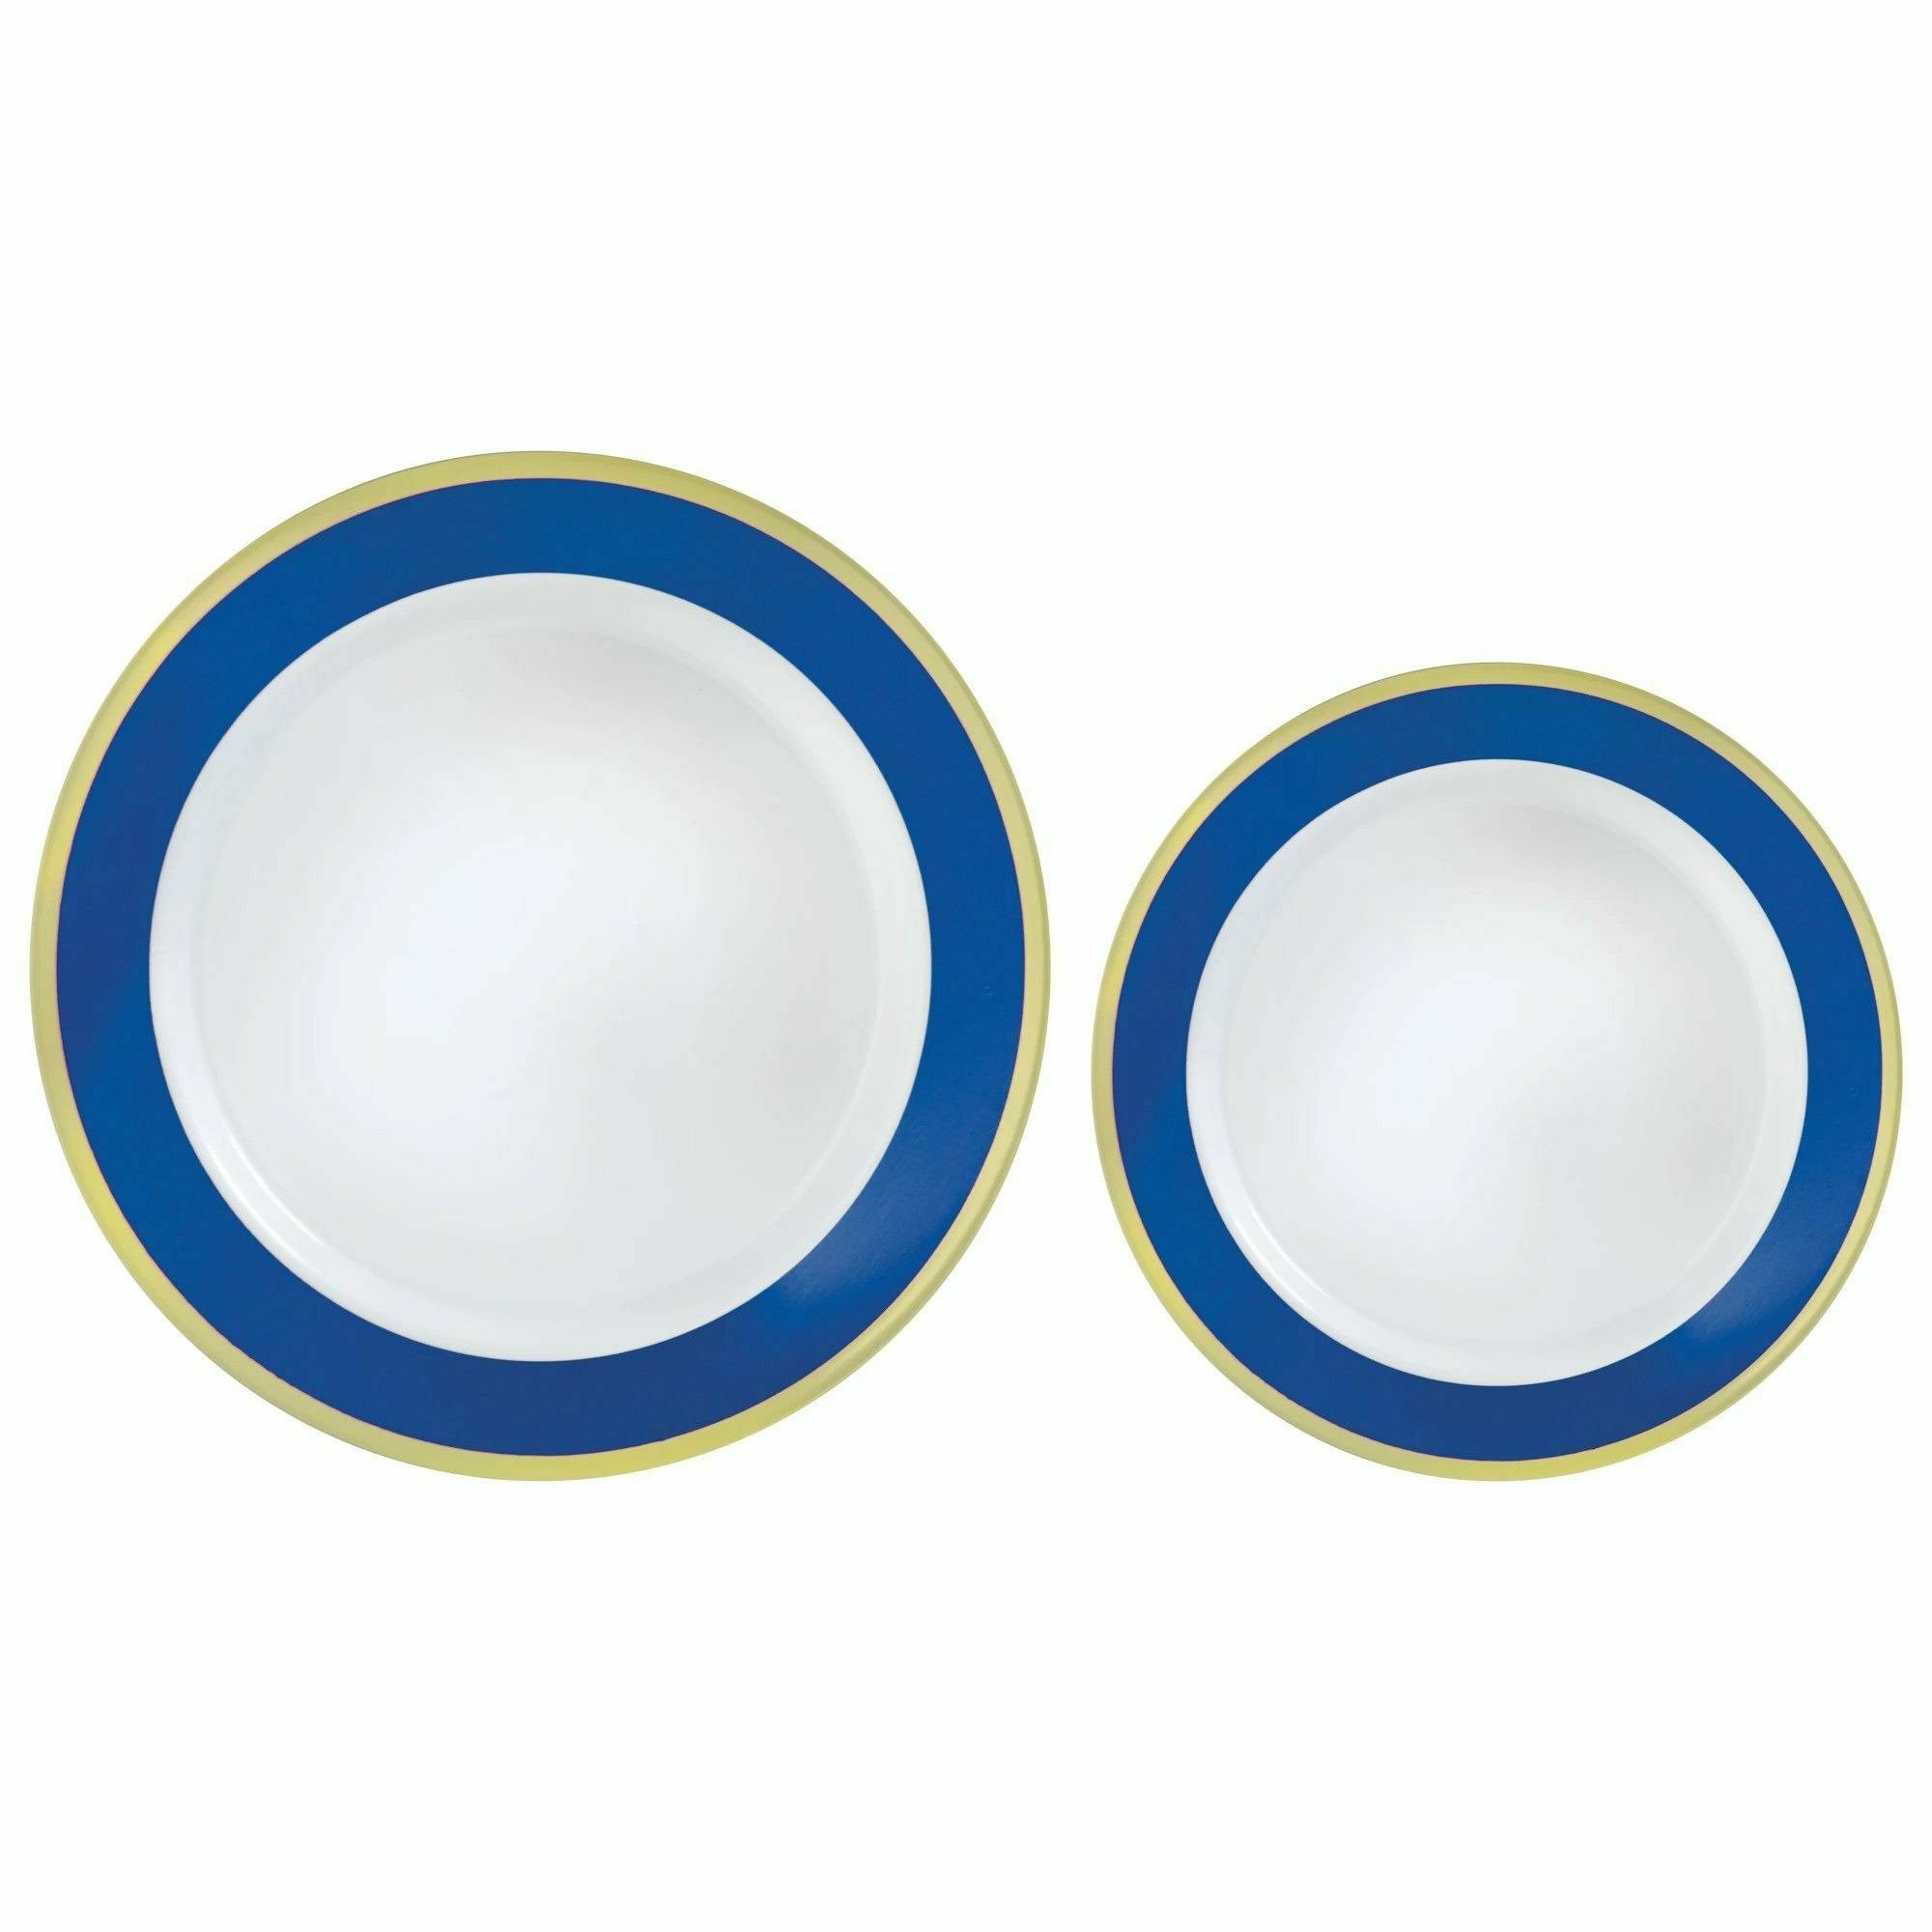 Amscan BASIC Bright Royal Blue - Multipack, Hot Stamped Plastic Border Plates